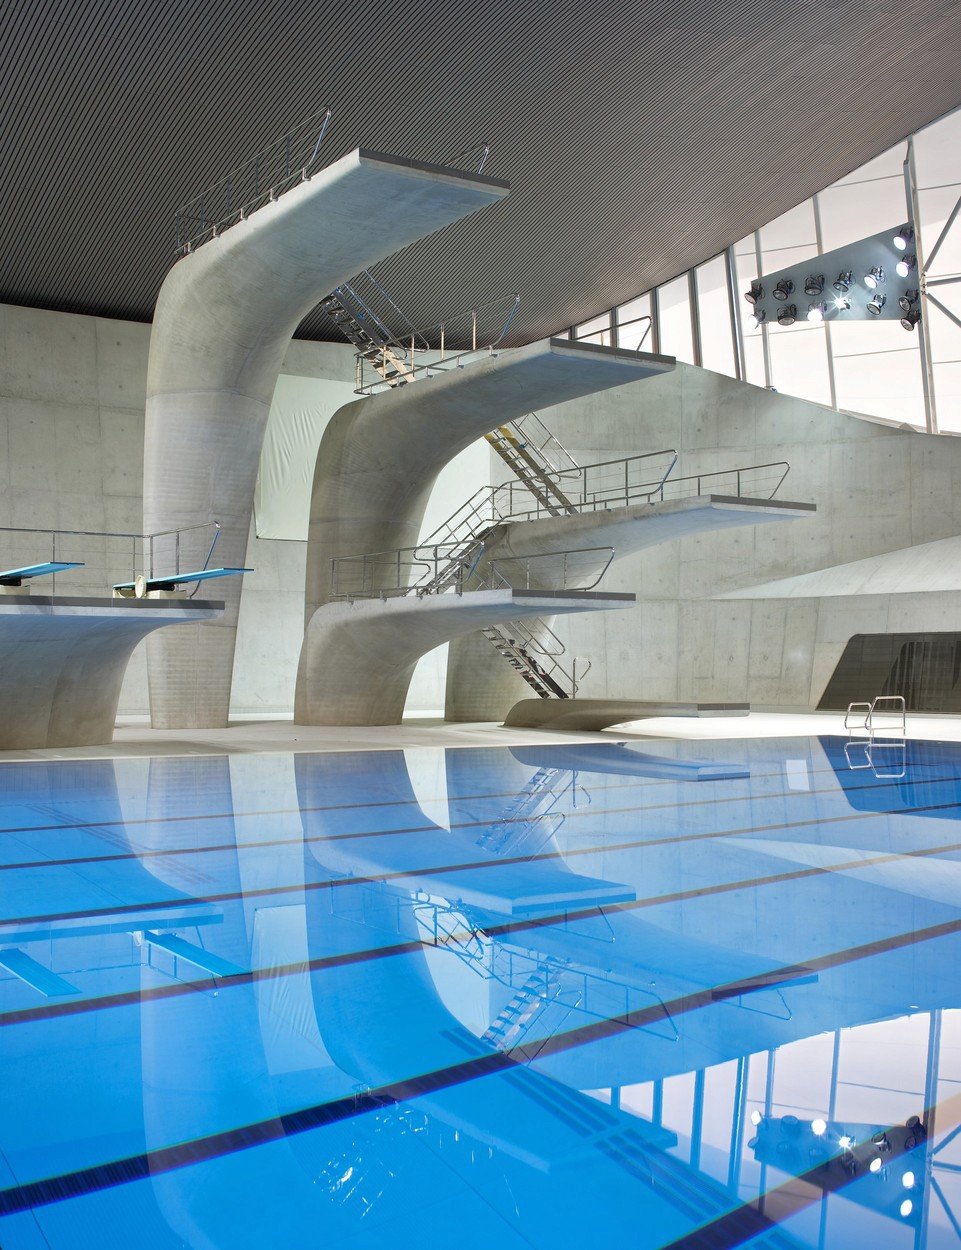 Architektonické skvosty od Zahy Hadid